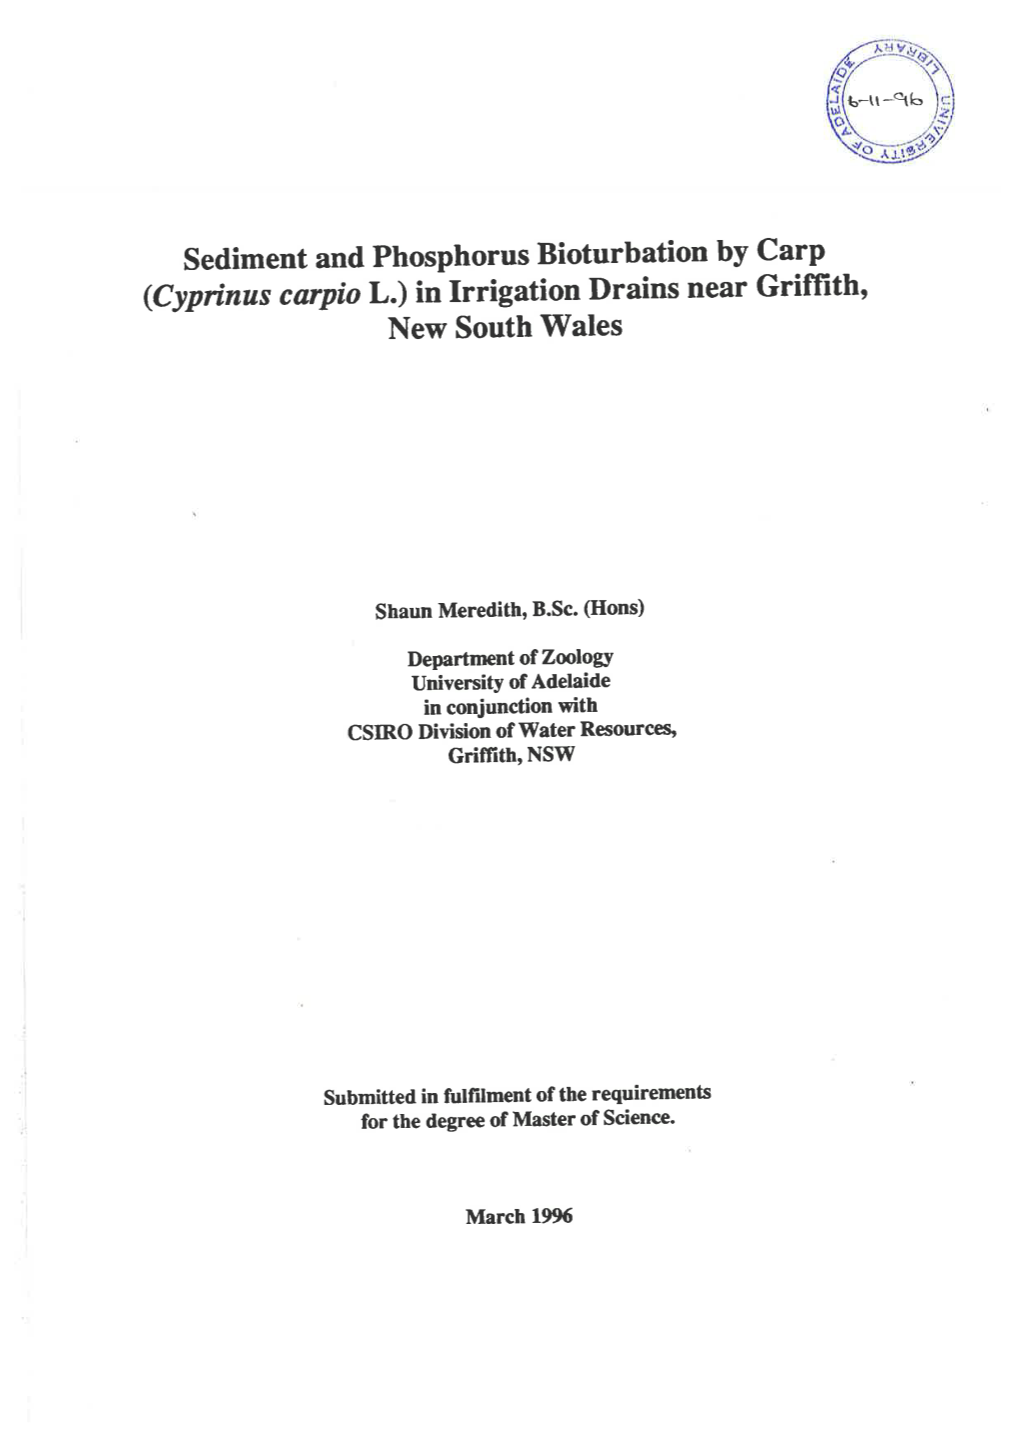 Sediment and Phosphorus Bioturbation by Carp (Cyprinus